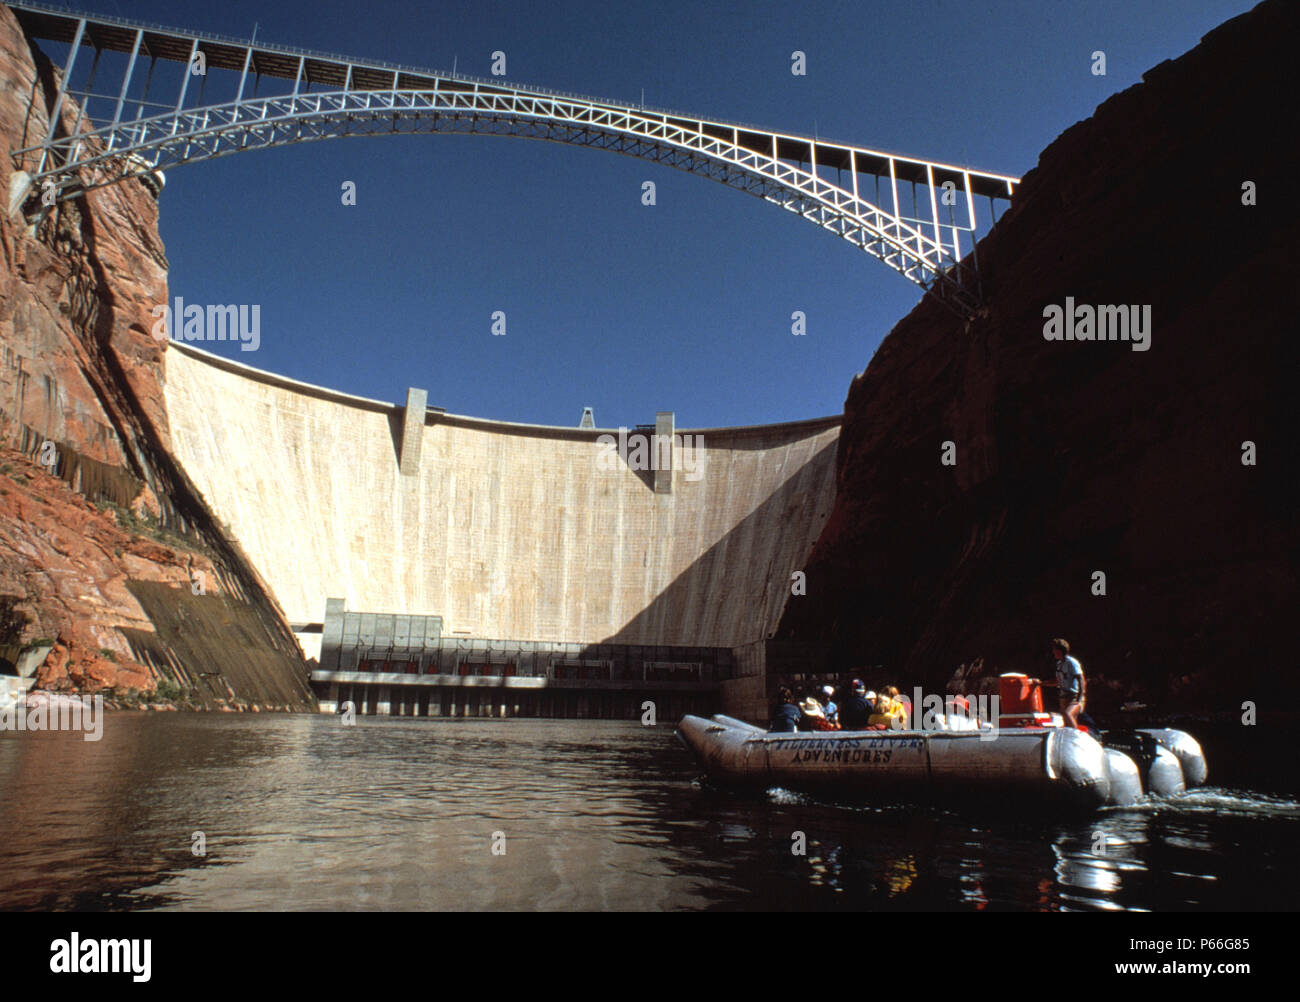 Rubber dinghy at Colorado river - Glen canyon dam - state of Arizona - USA Stock Photo